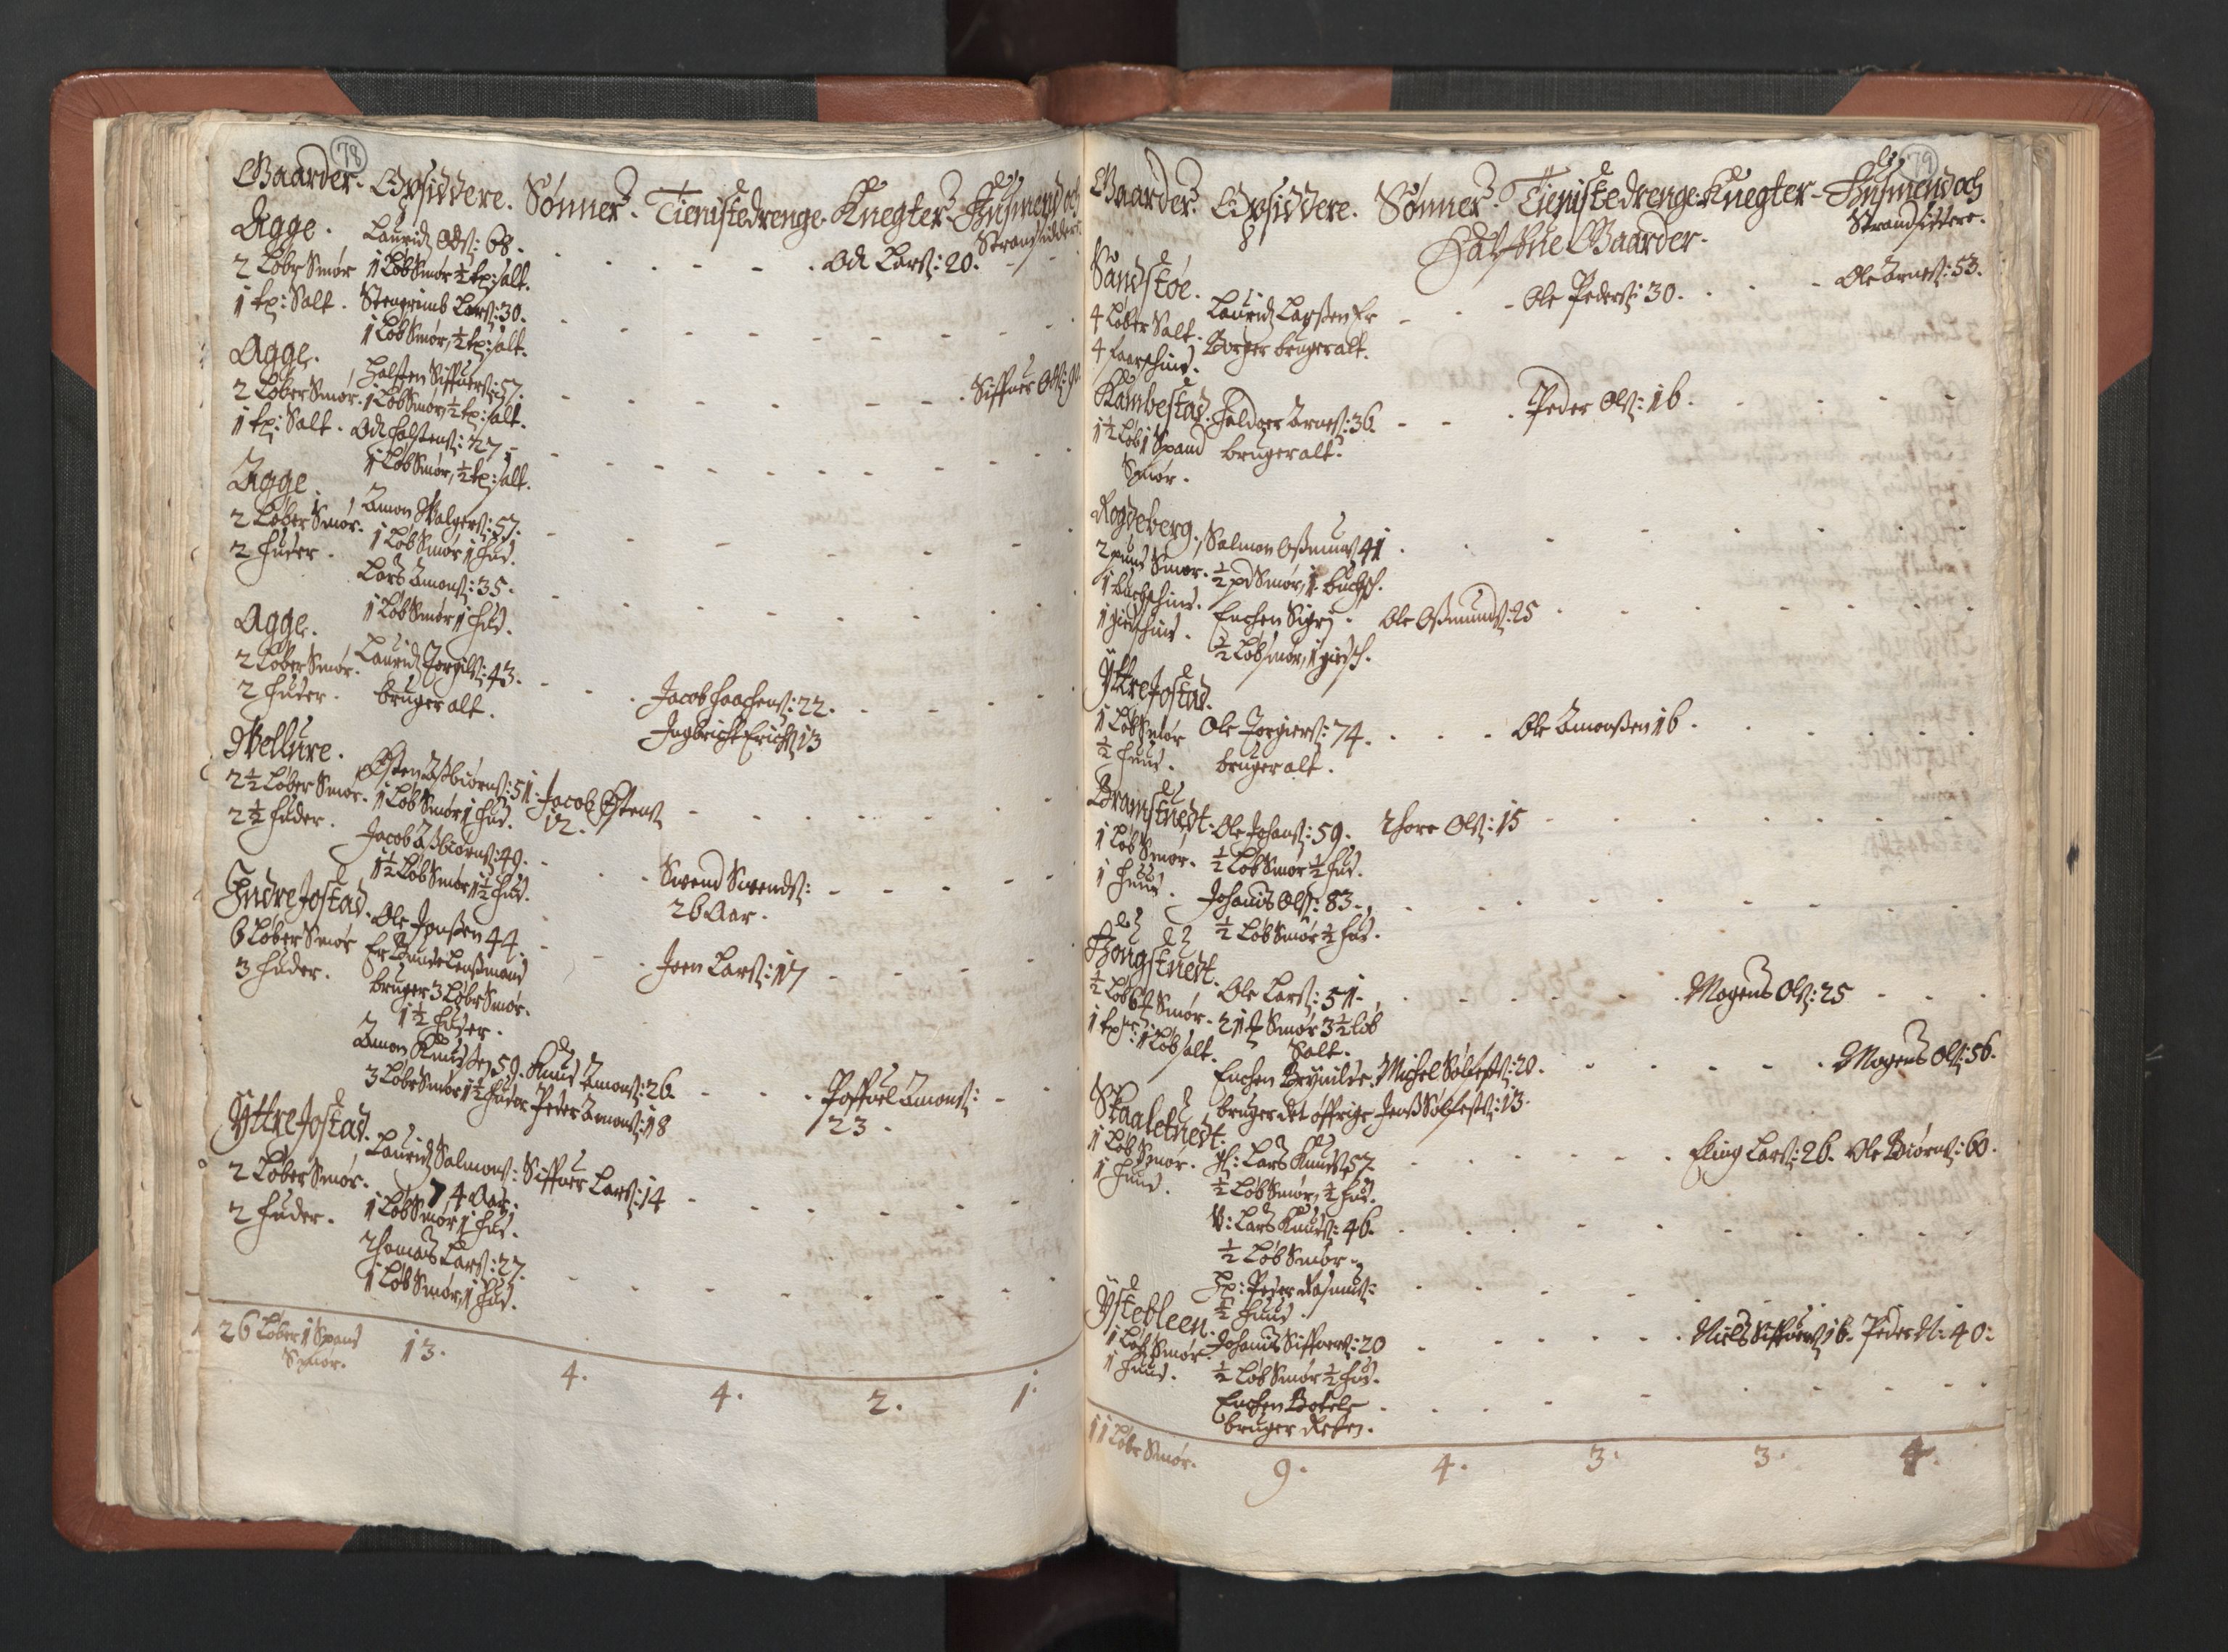 RA, Fogdenes og sorenskrivernes manntall 1664-1666, nr. 14: Hardanger len, Ytre Sogn fogderi og Indre Sogn fogderi, 1664-1665, s. 78-79